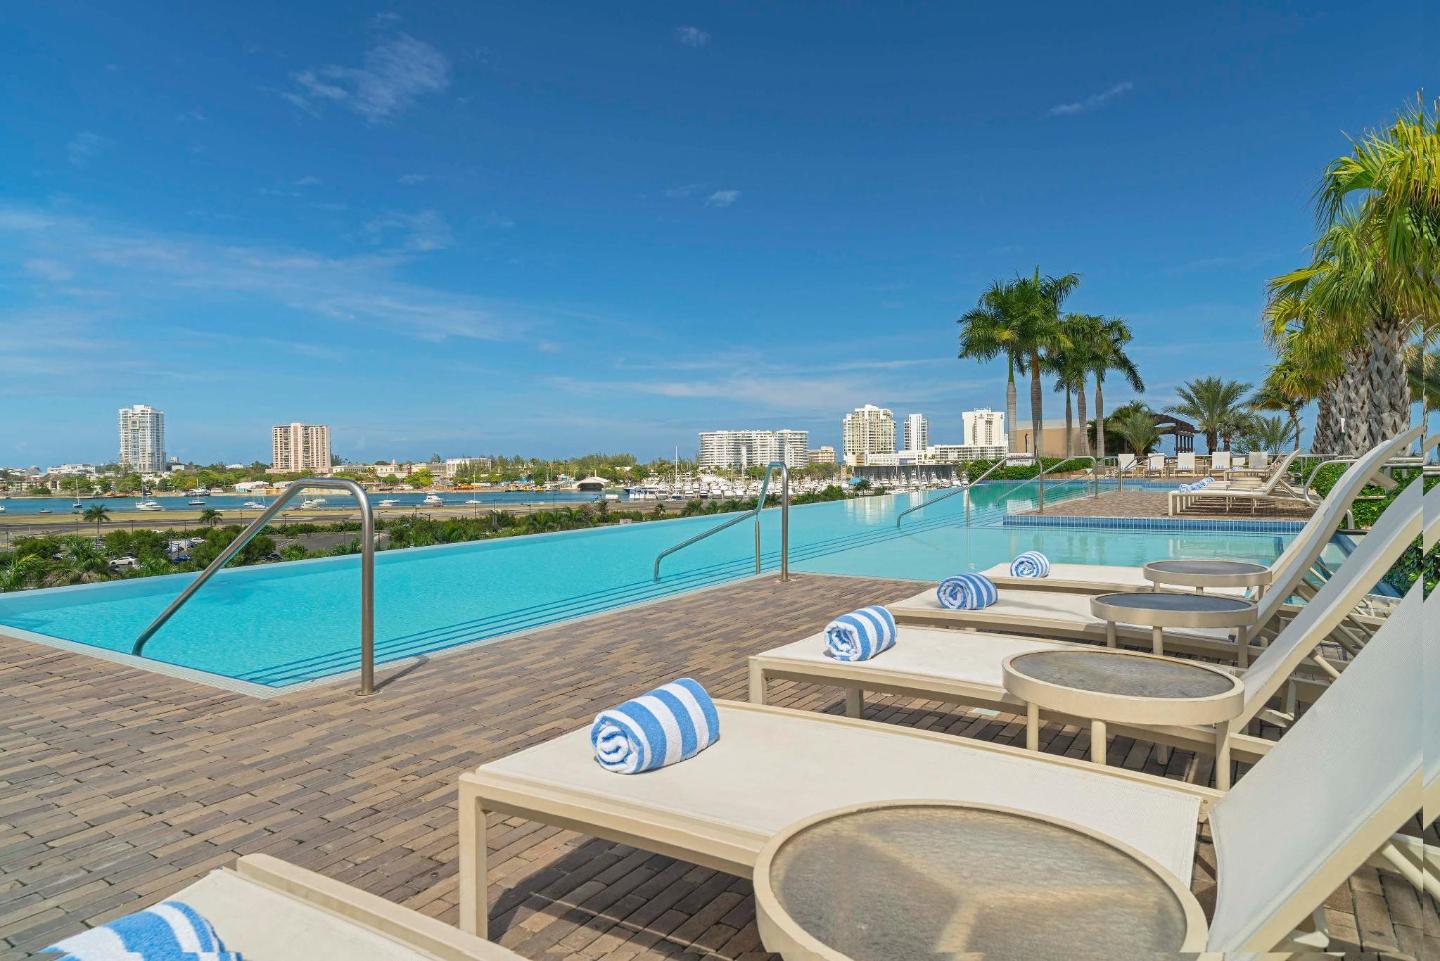 The 10 best resorts in San Juan, Puerto Rico | Booking.com